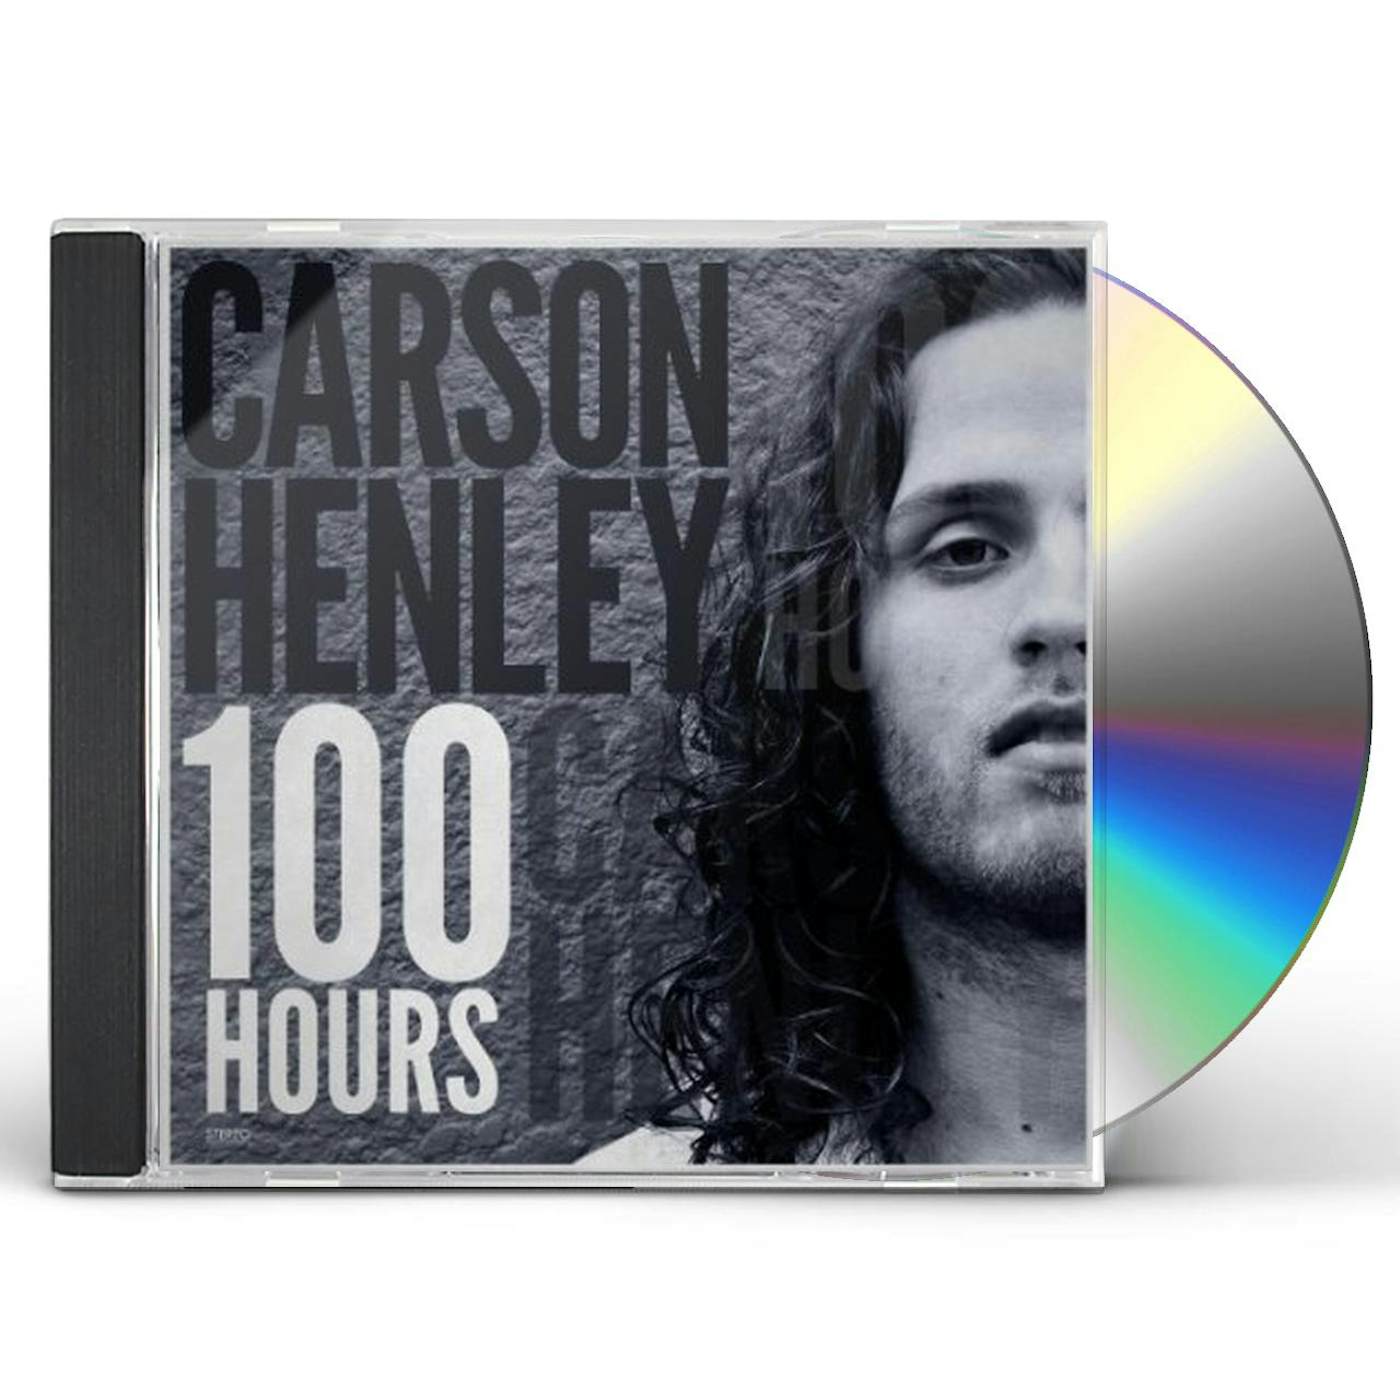 Carson Henley 100 HOURS CD